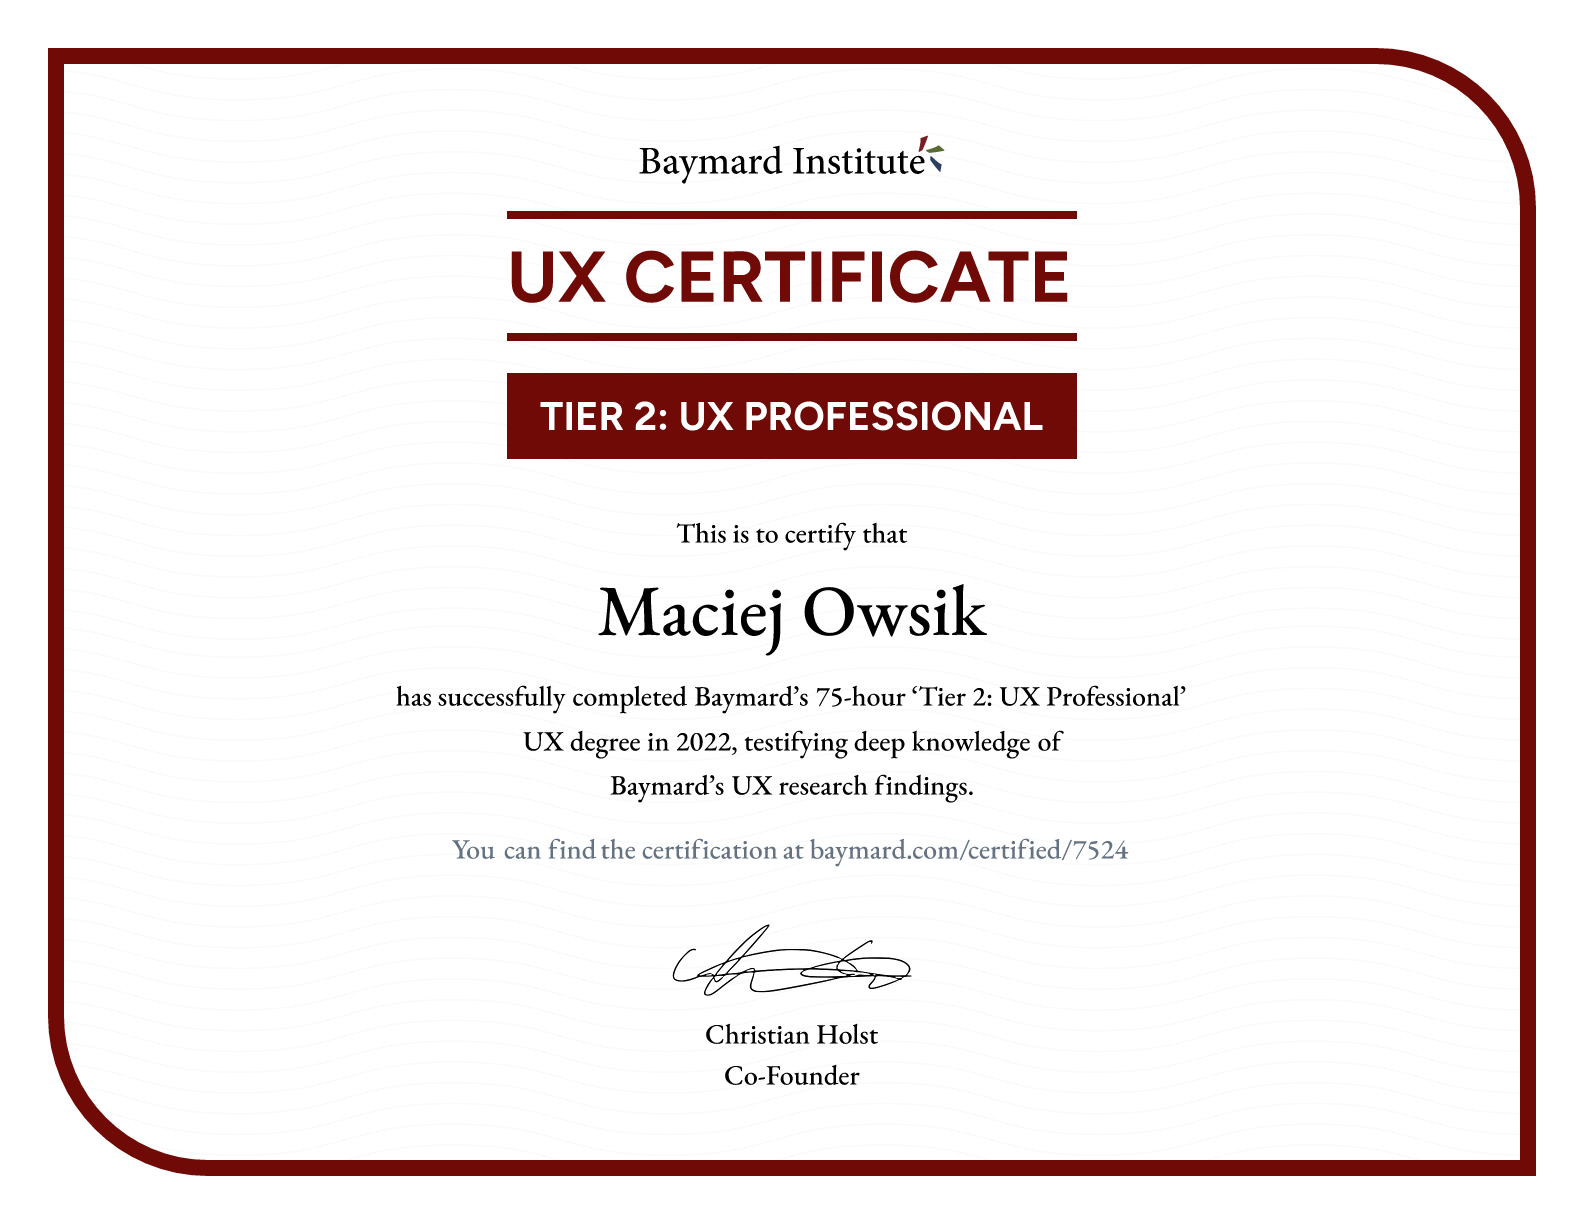 Maciej Owsik’s certificate